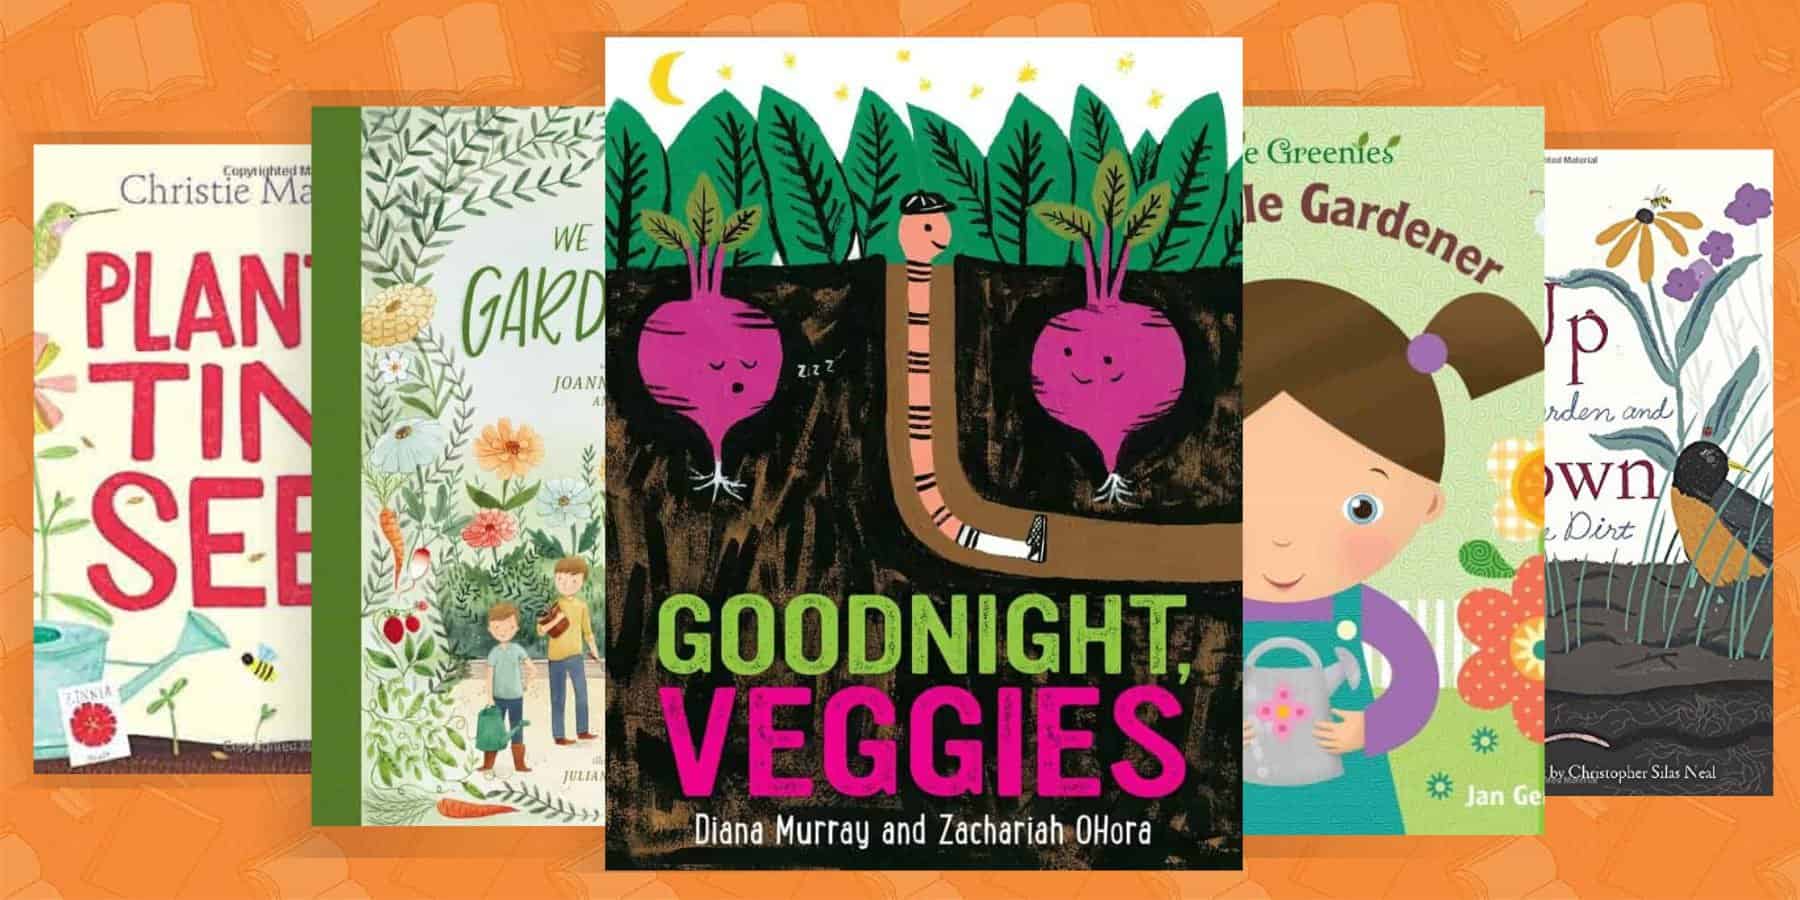 24 Wonderful Gardening Books for Kids